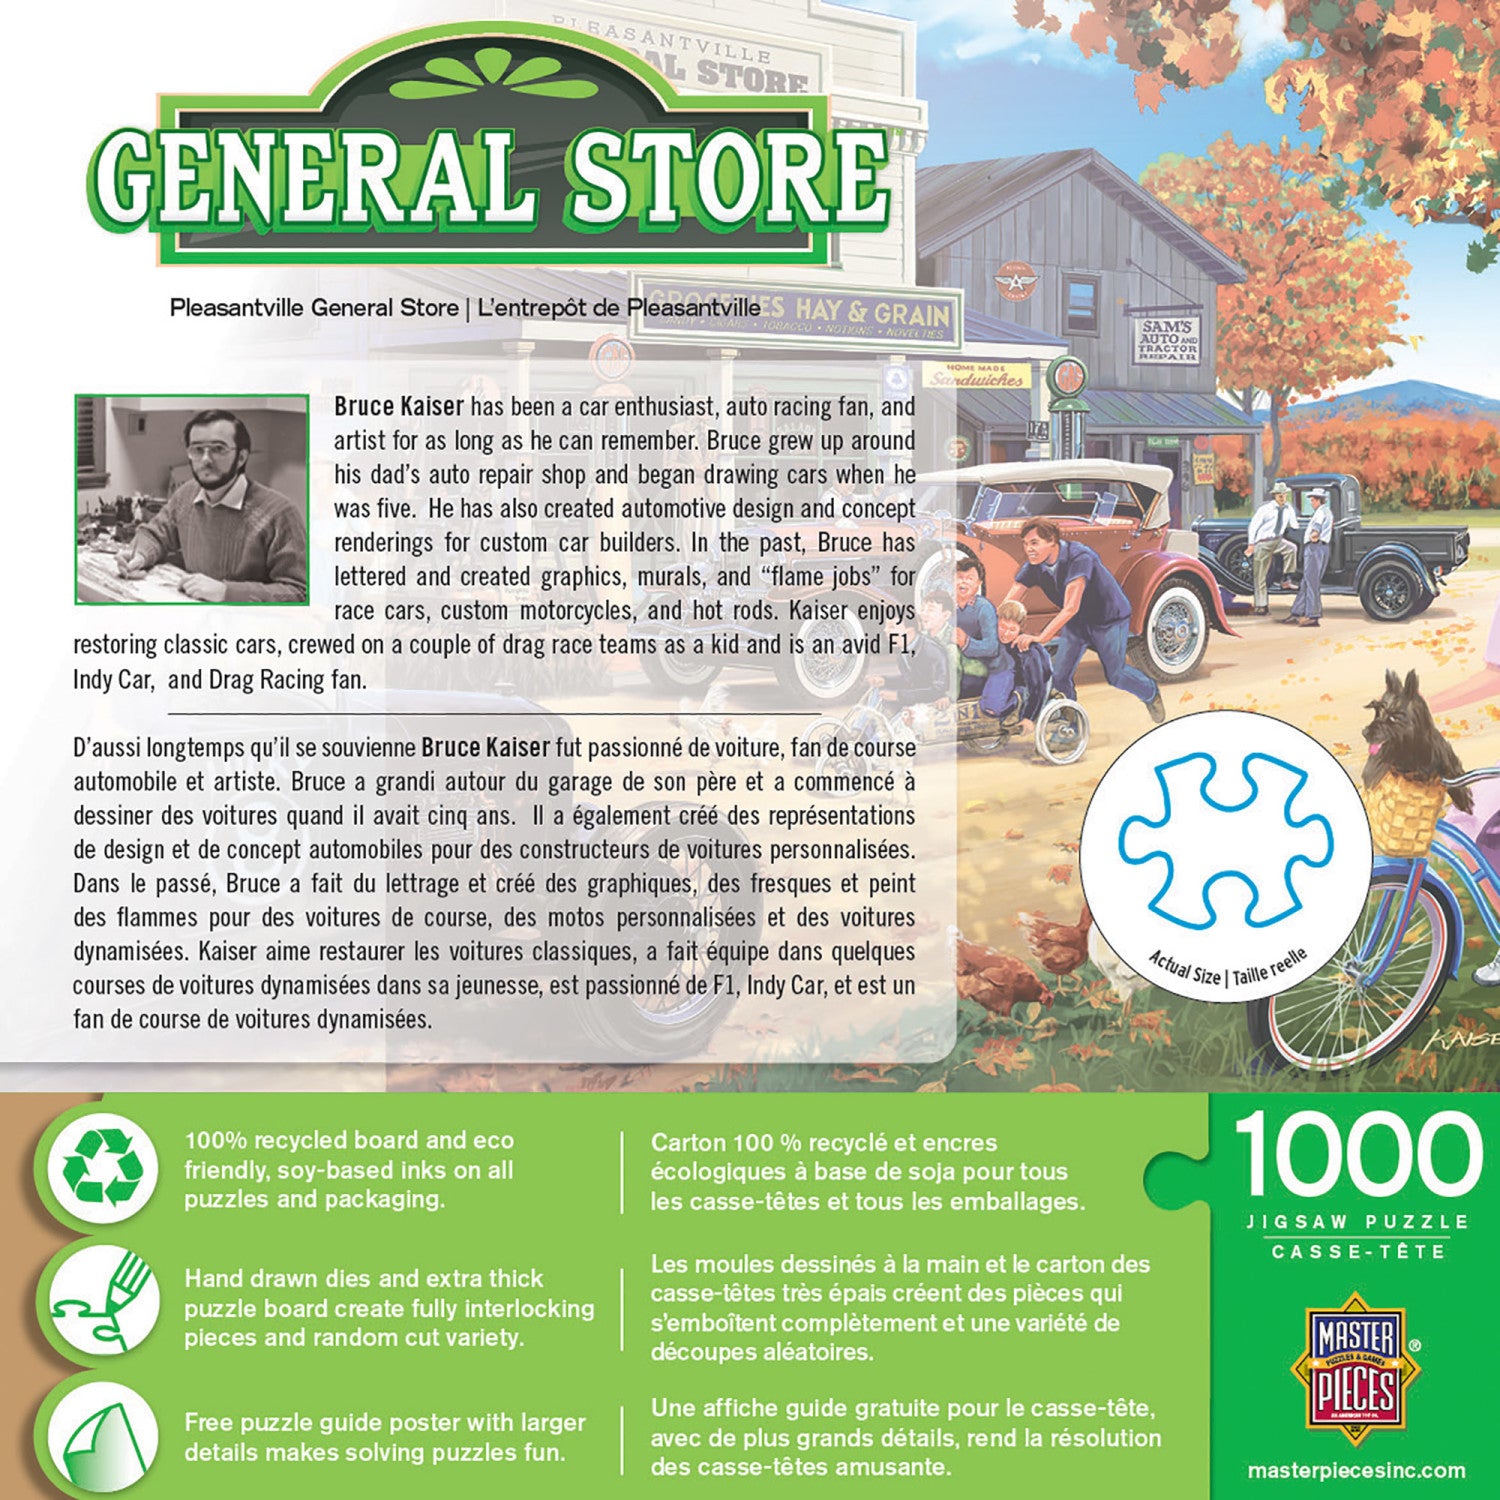 General Store - Pleasantville 1000 Piece Jigsaw Puzzle